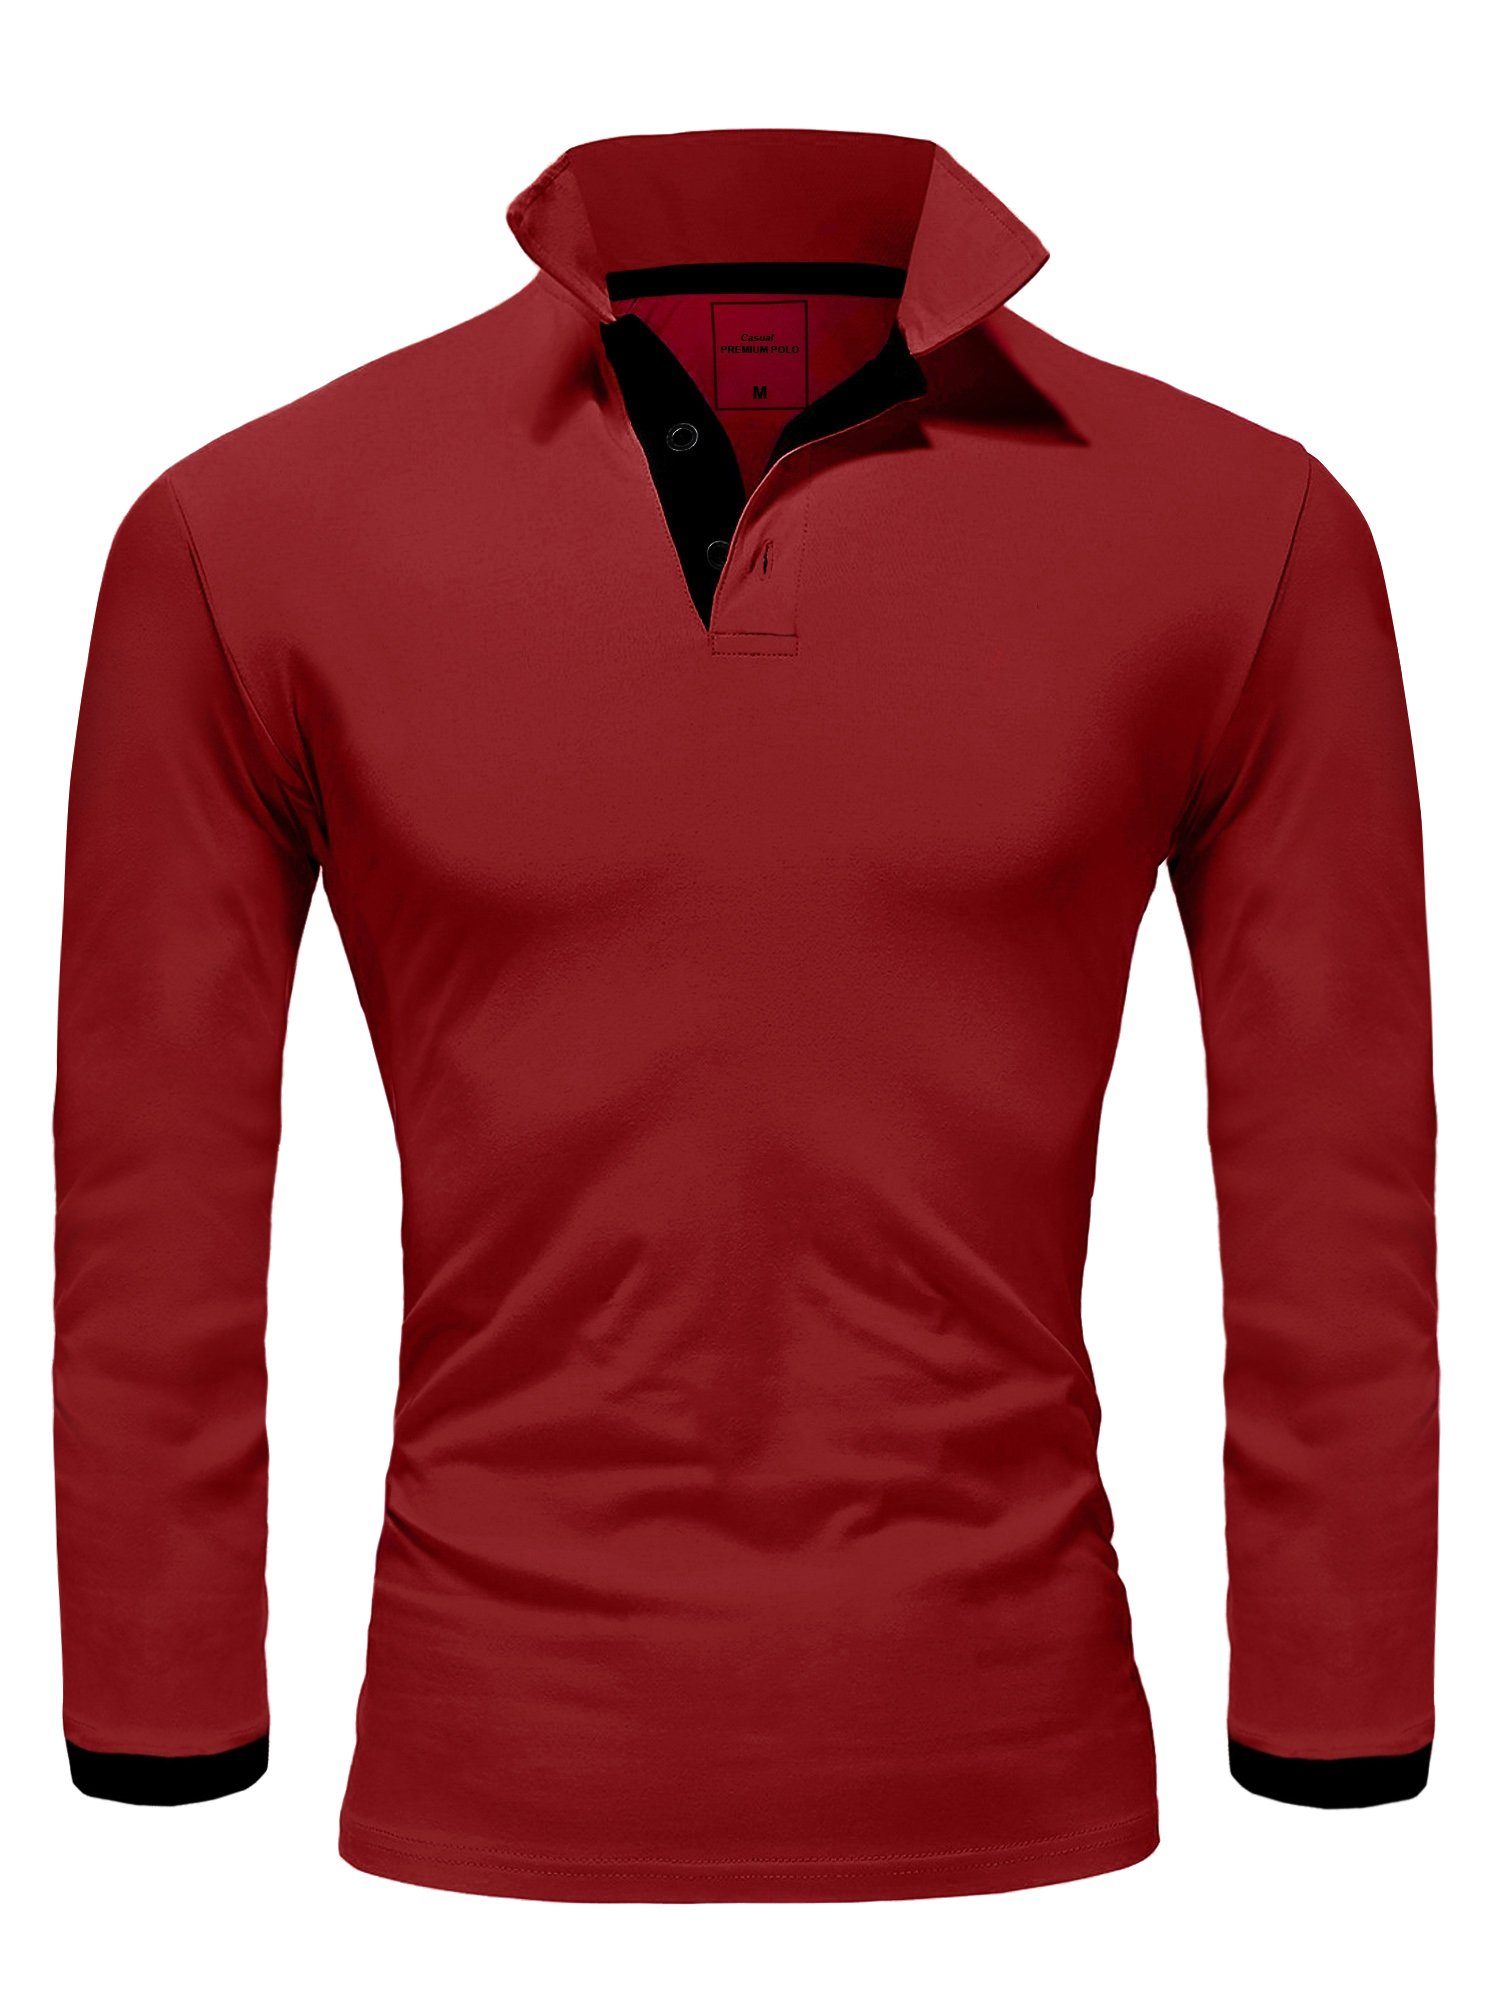 Amaci&Sons Poloshirt CHARLOTTE Langarm Kontrast Poloshirt Bordeaux/Schwarz | Poloshirts